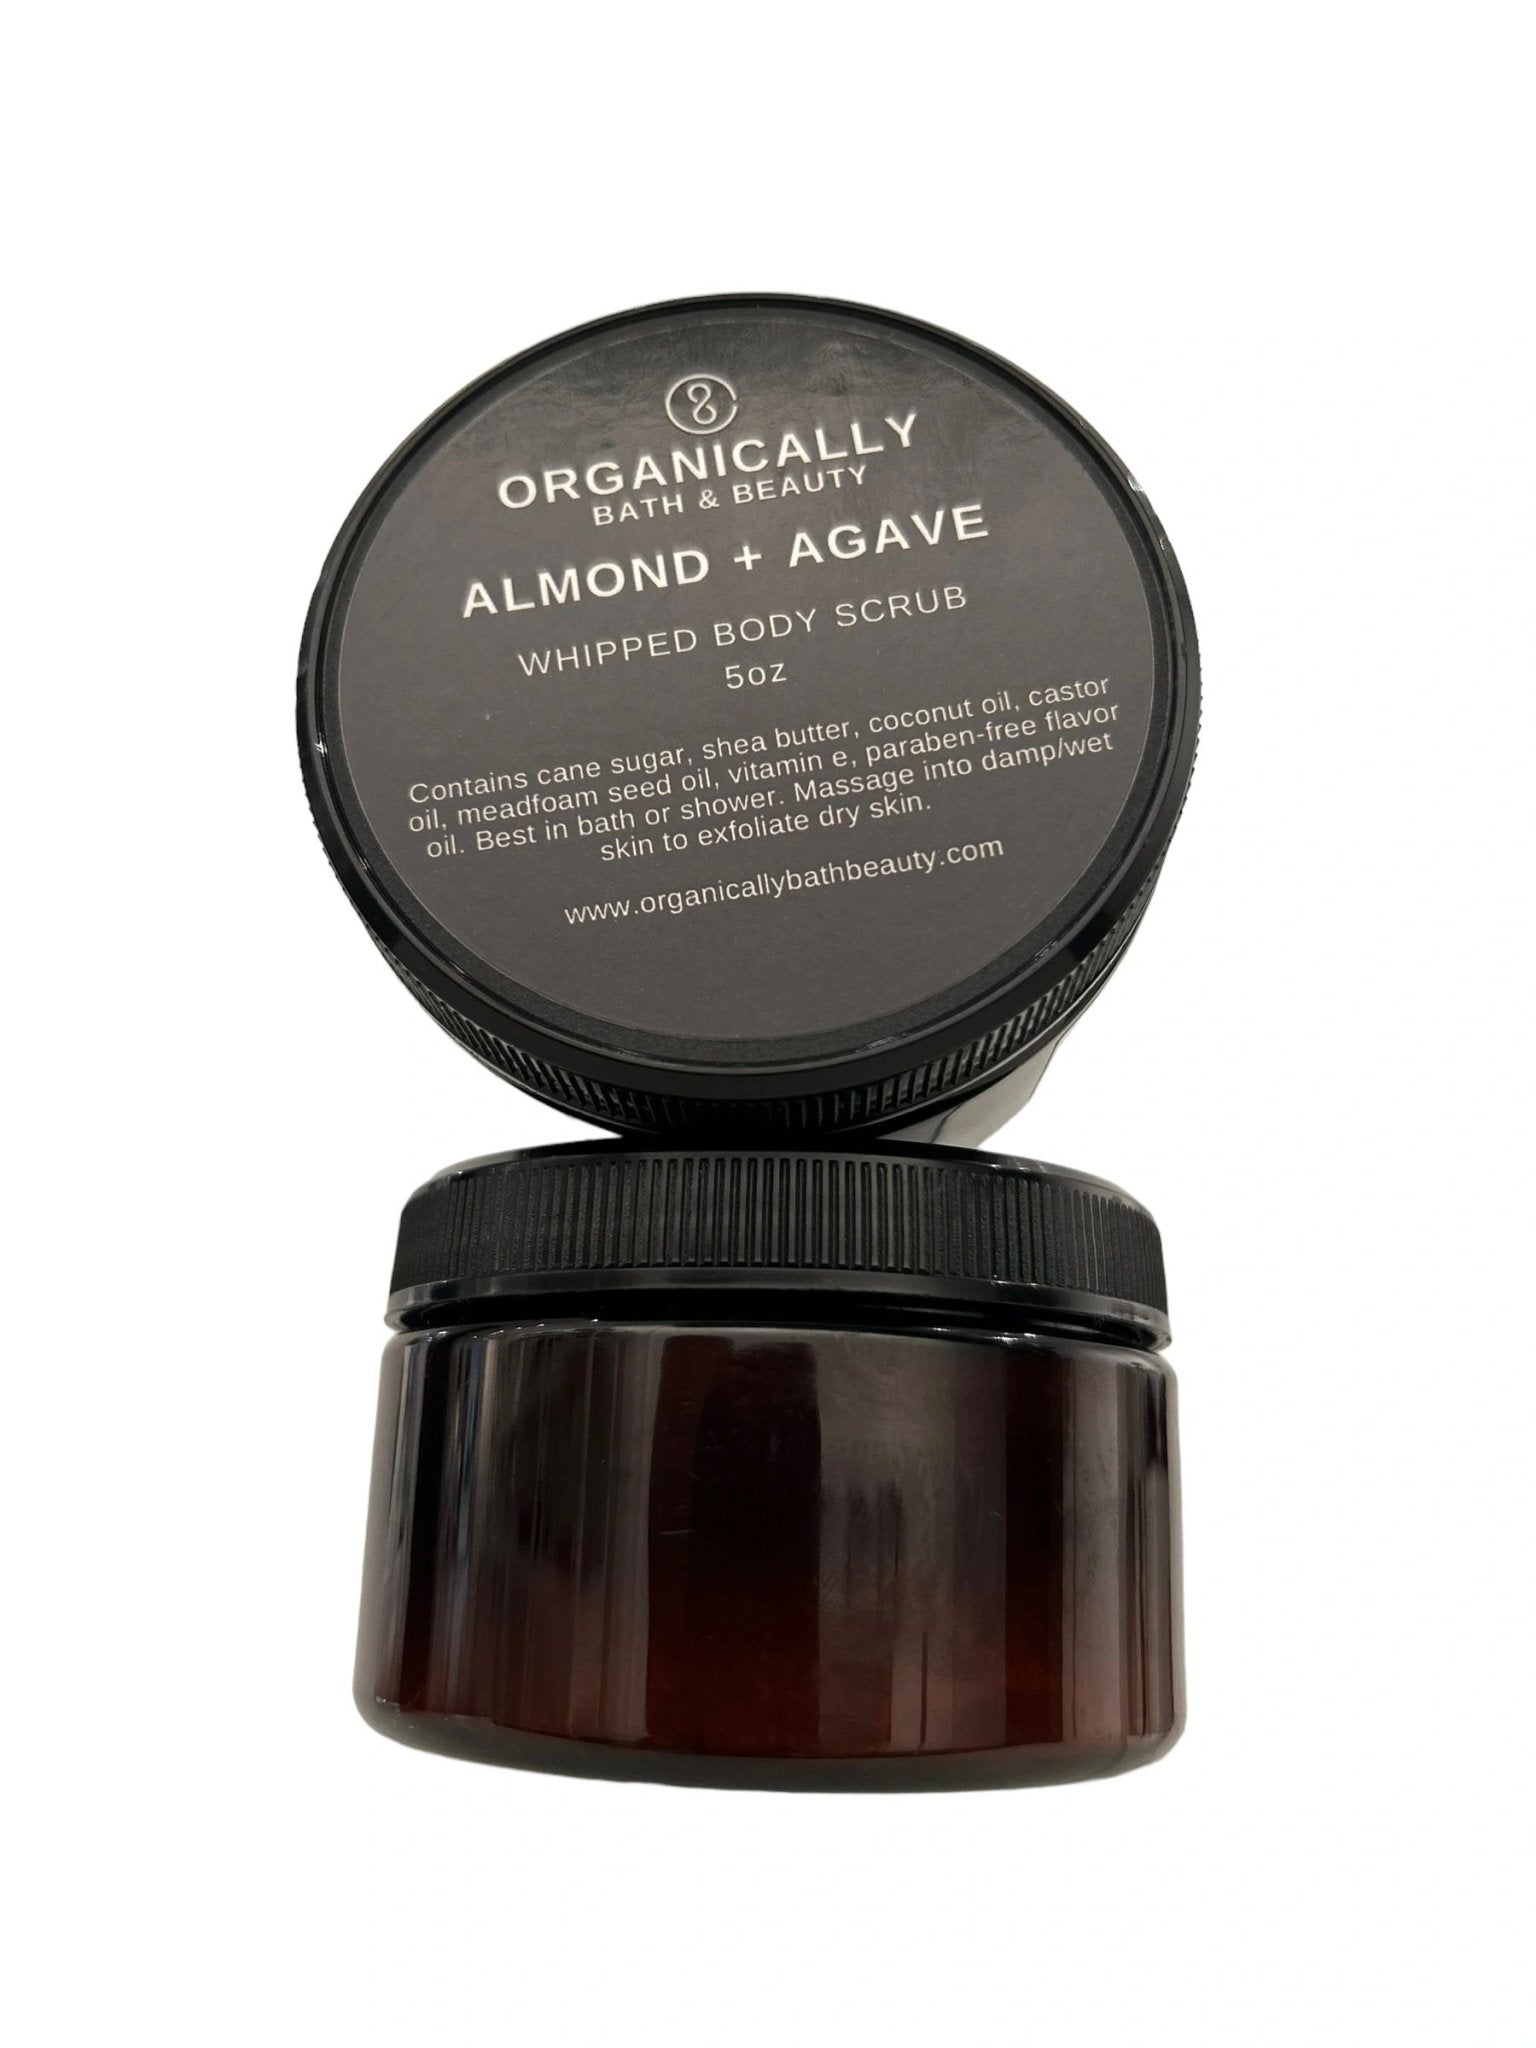 Almond + Agave Whipped Body Scrub - Organically Bath & Beauty